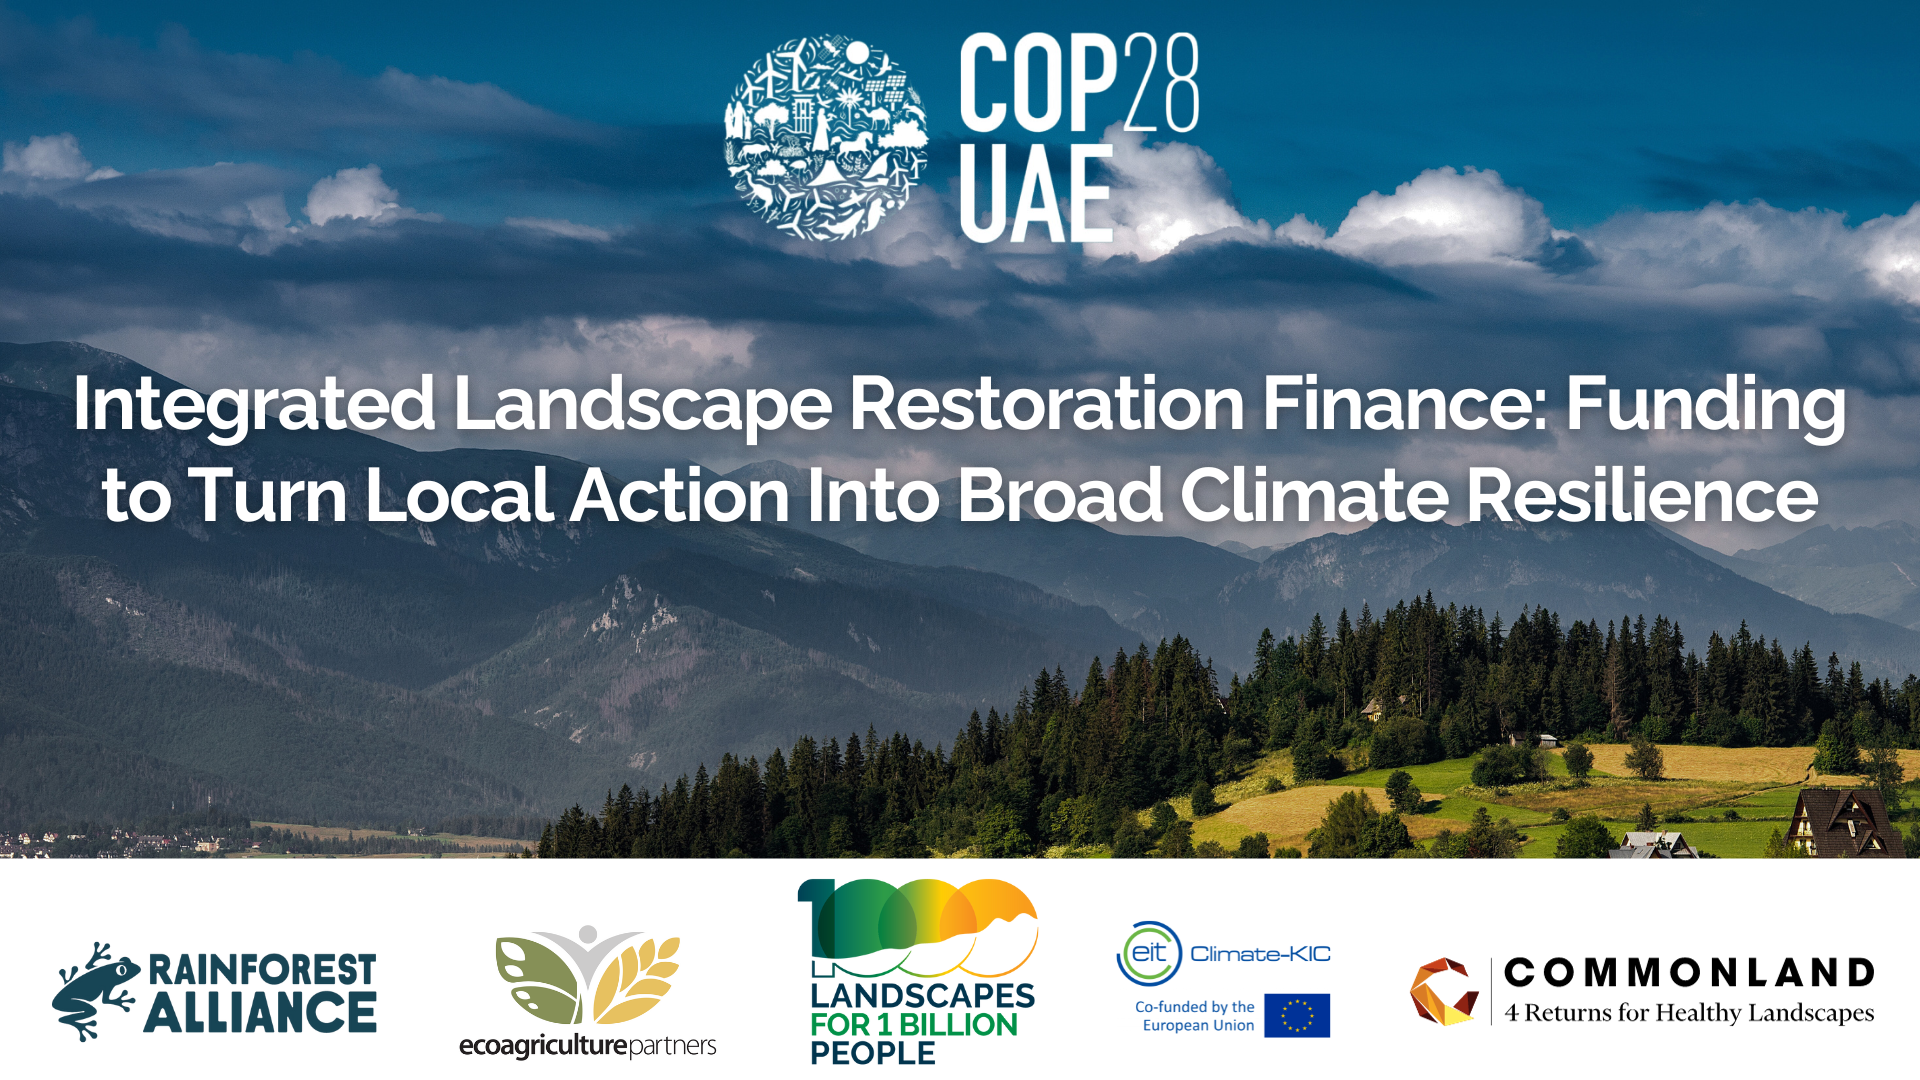 Rainforest Alliance, Commonland, Climate-KIC, EcoAgriculture Partners, 1000 Landscapes for 1 Billion People